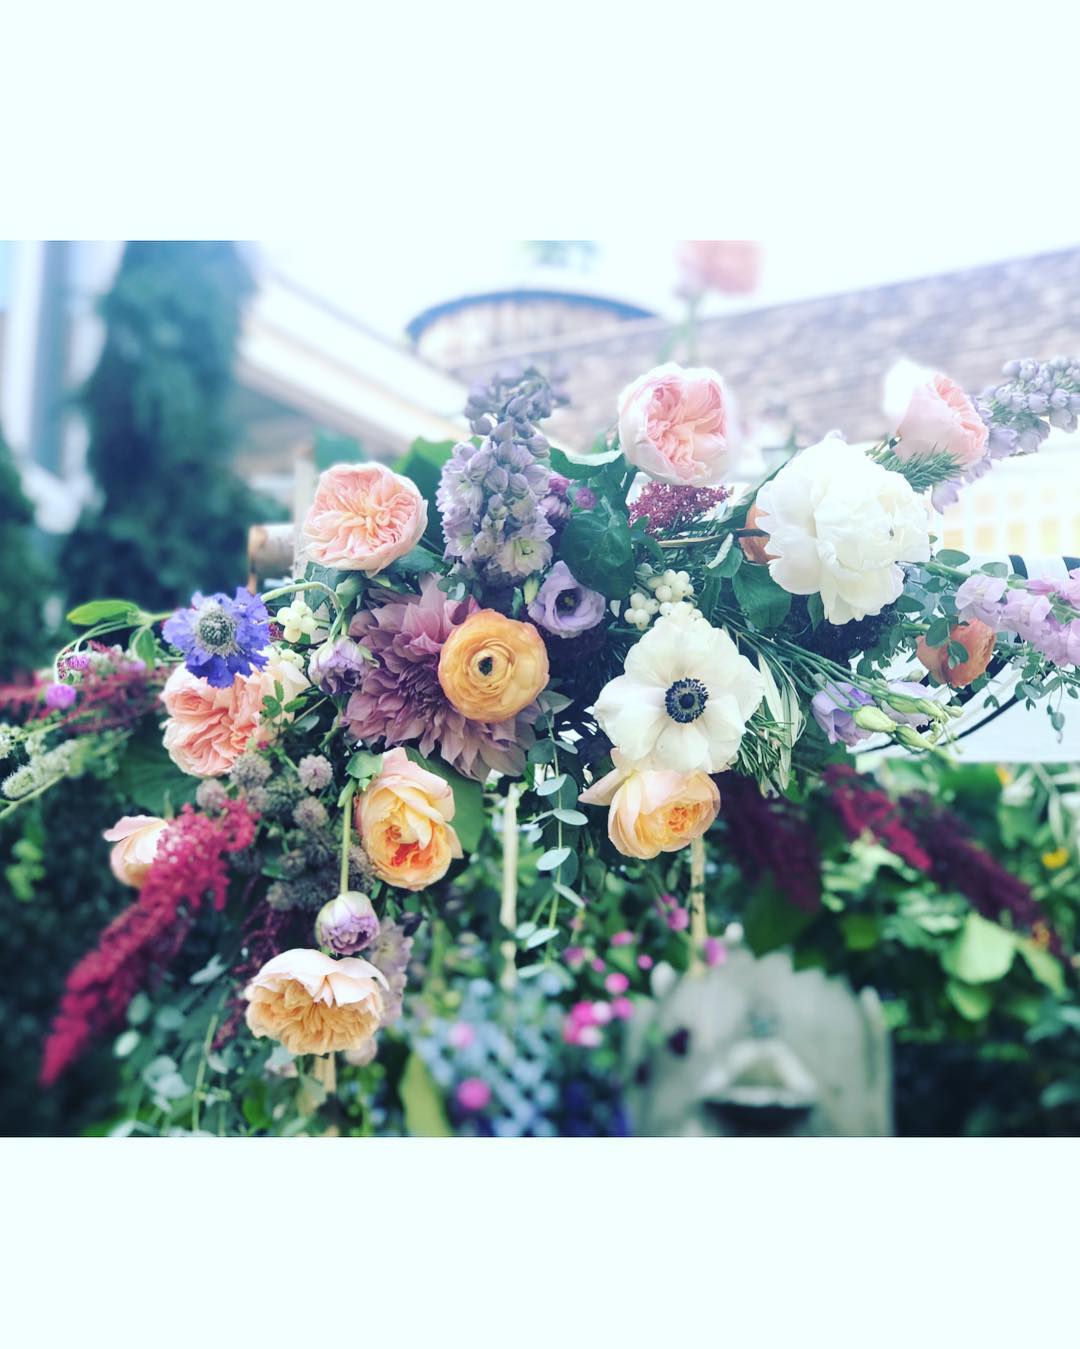 {chuppah}
.
.
#prettyflowers #chuppah #ceremony #ido #love #forever #ceremonydecor #gardenstyle #englishgarden #pastels #peach #lavender #lotusfloraldesigns #weddingdesign